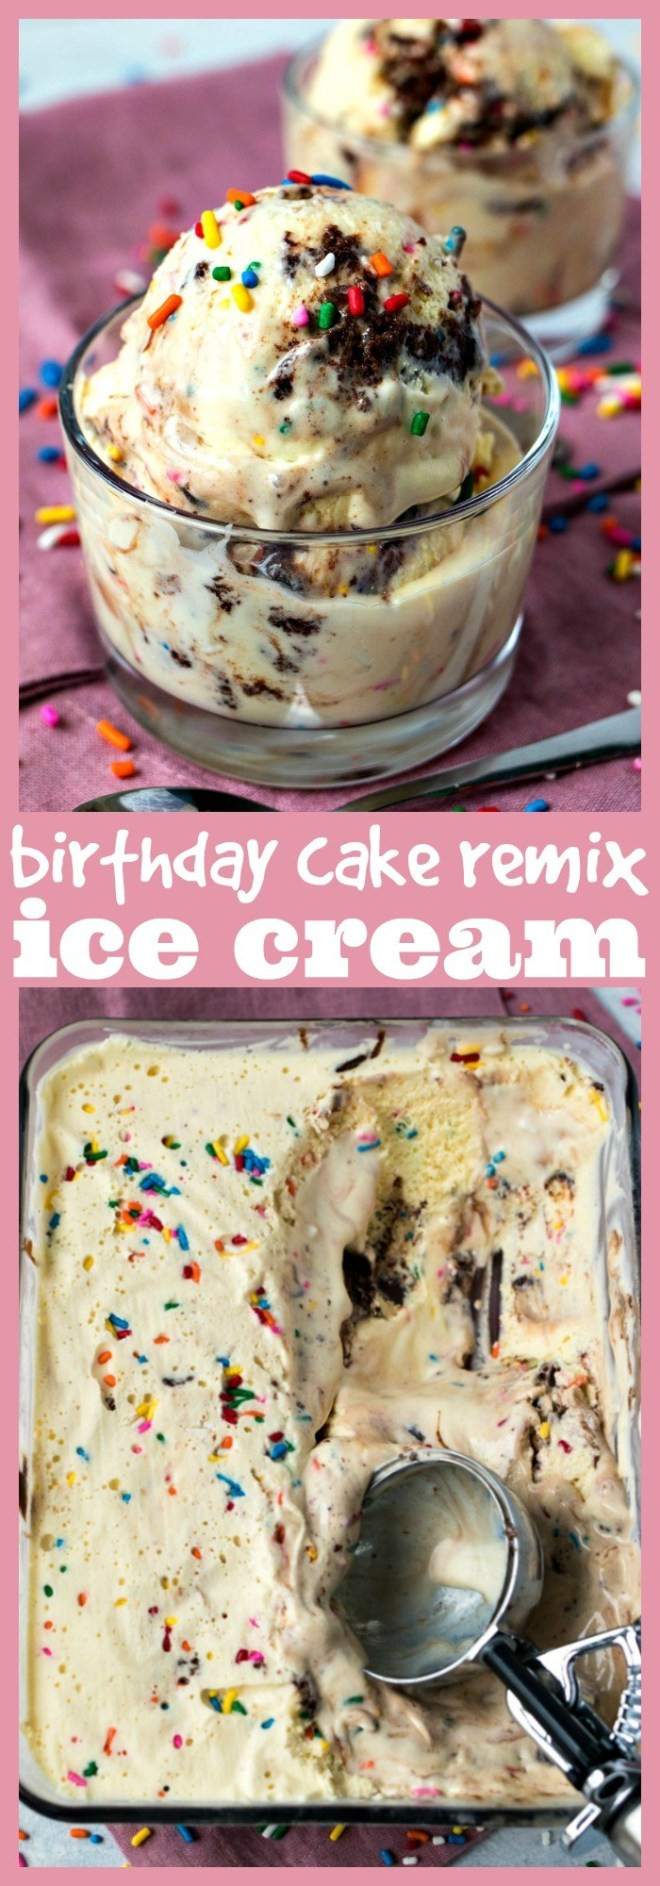 Best ideas about Birthday Cake Remix
. Save or Pin Birthday Cake Remix Ice Cream Now.